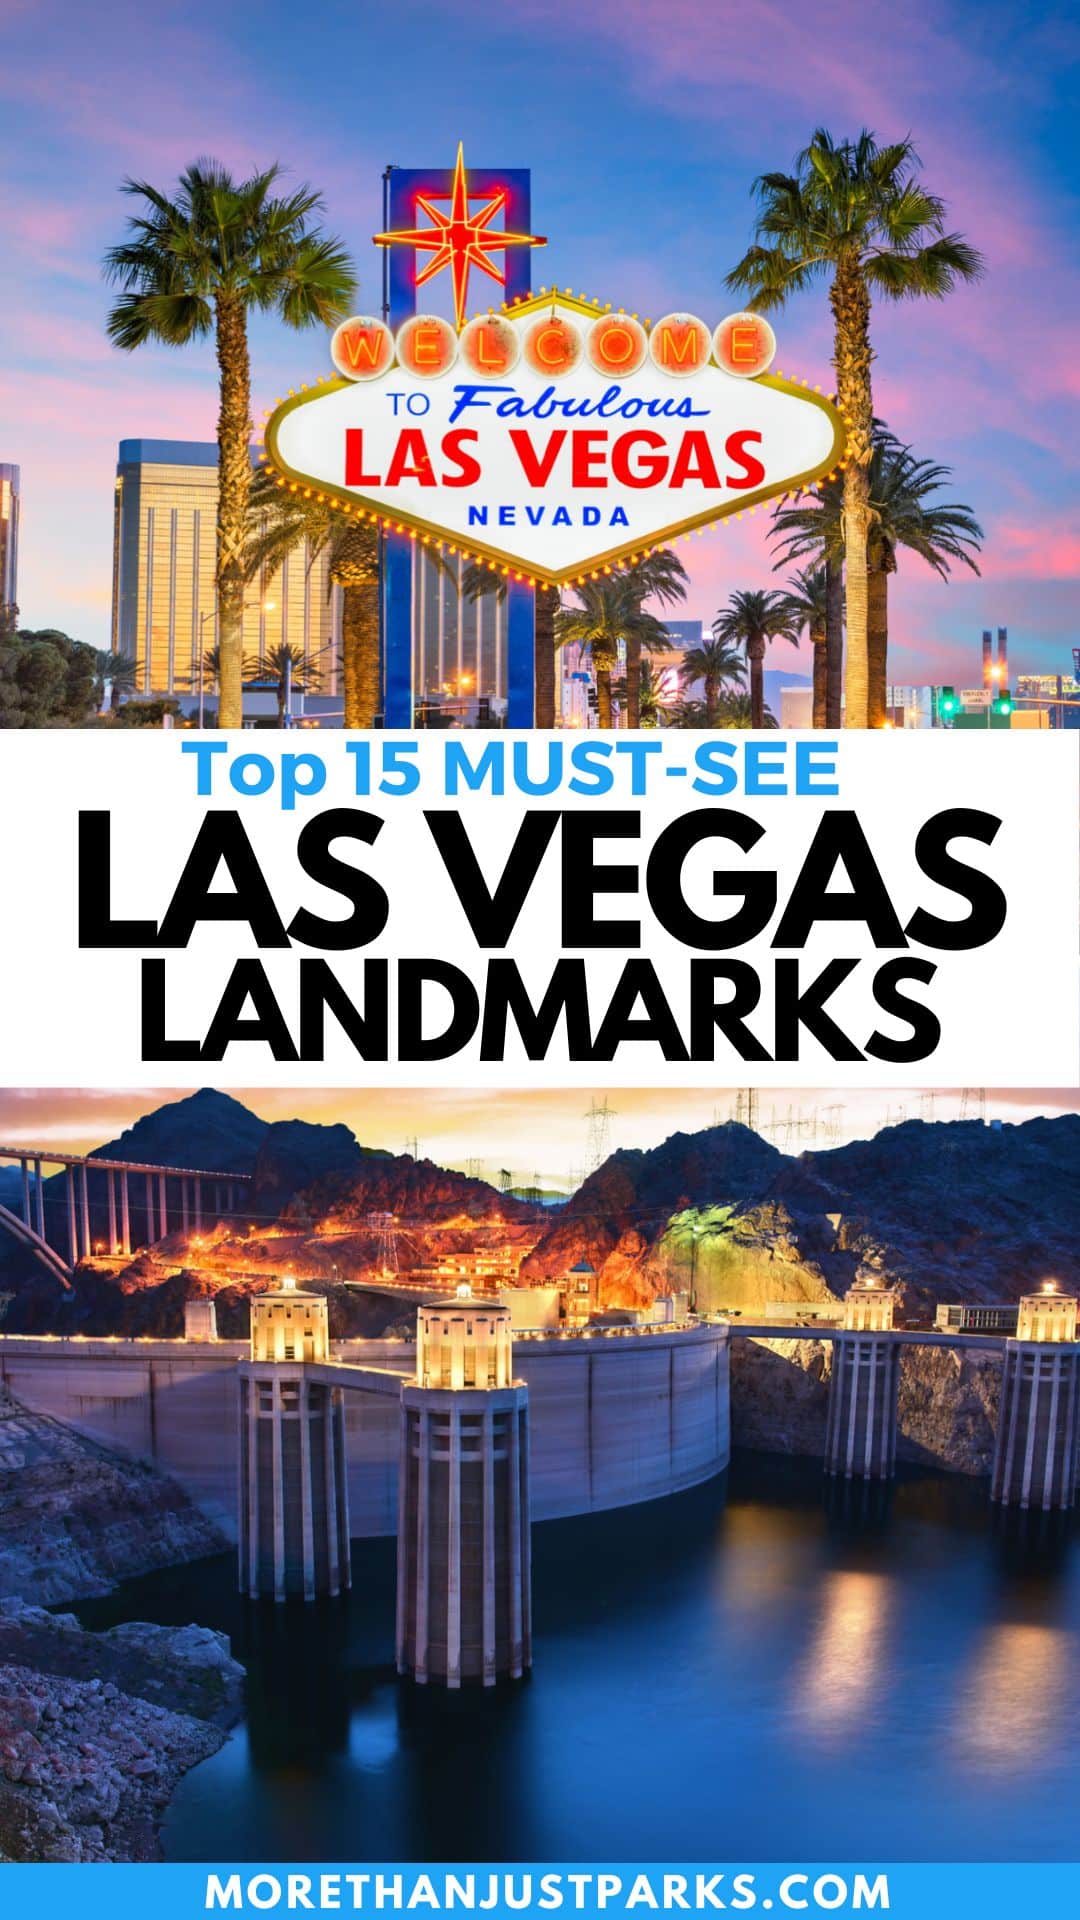 Las Vegas Landmarks Graphic